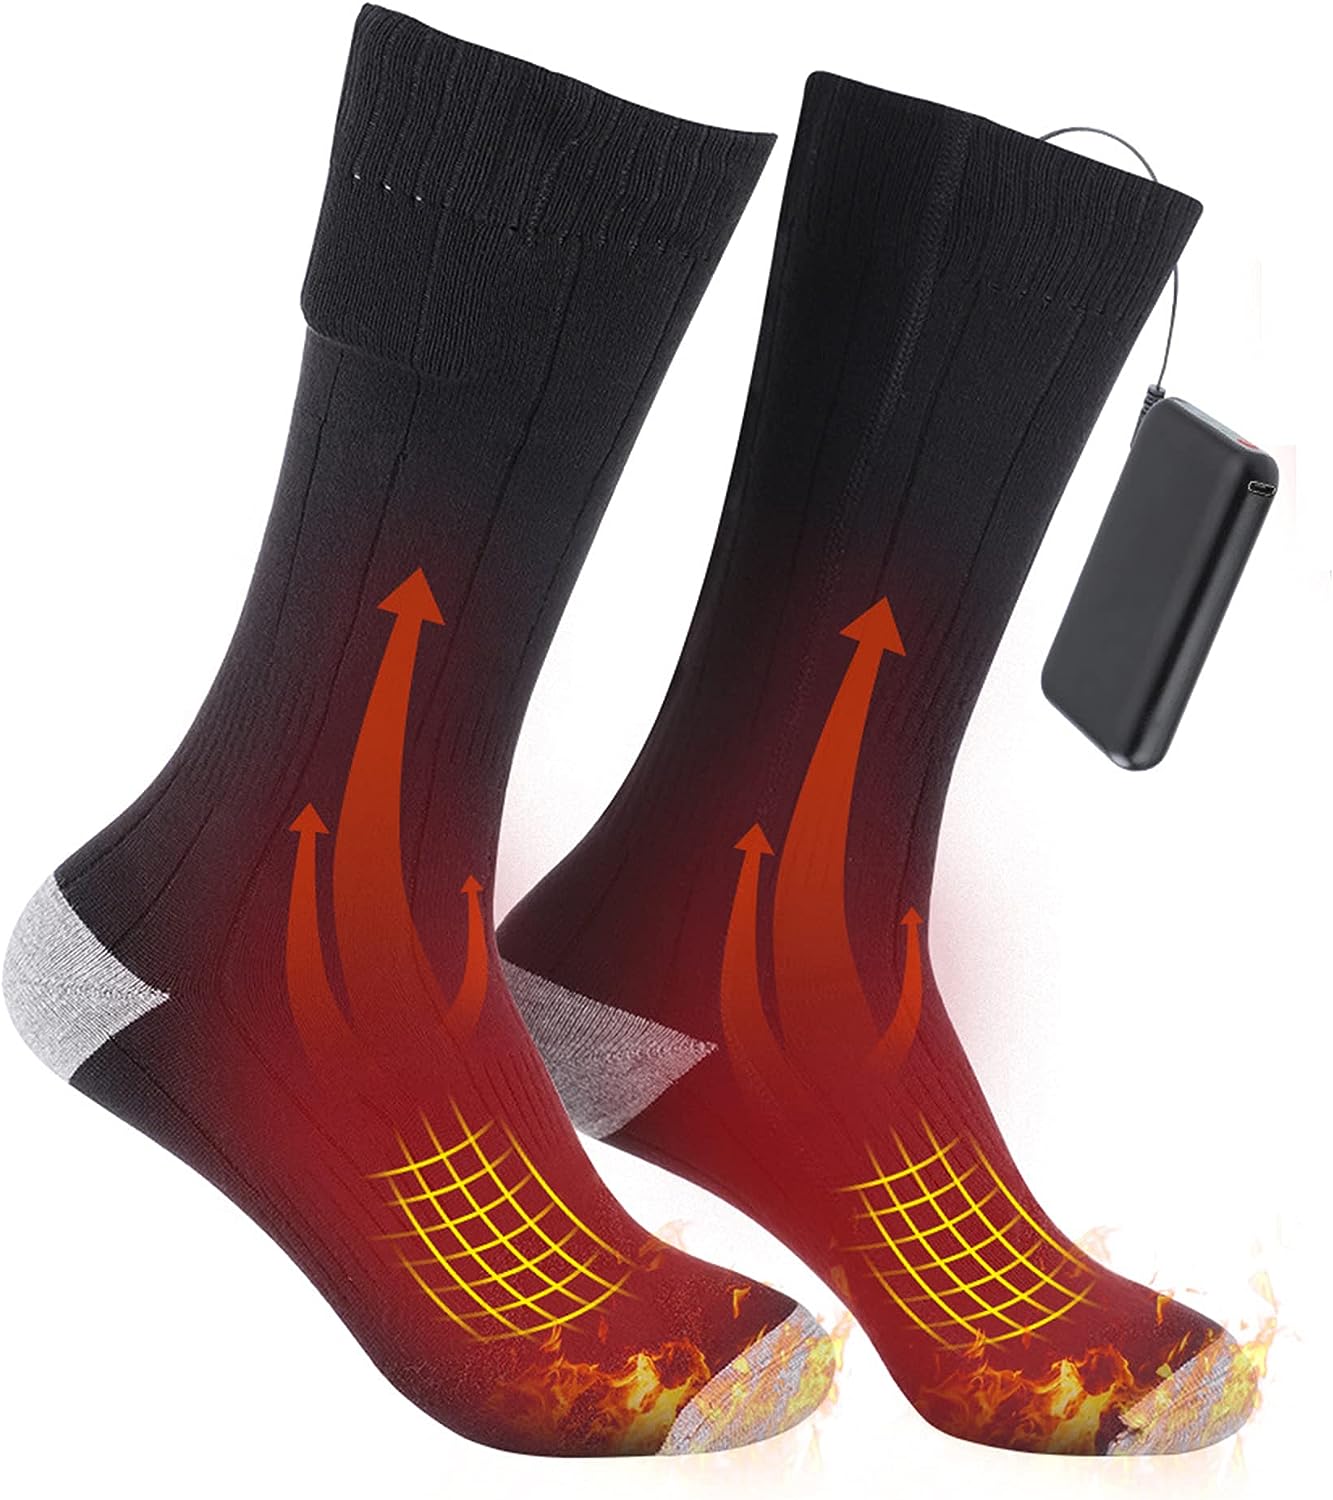 CYzpf Heated Socks